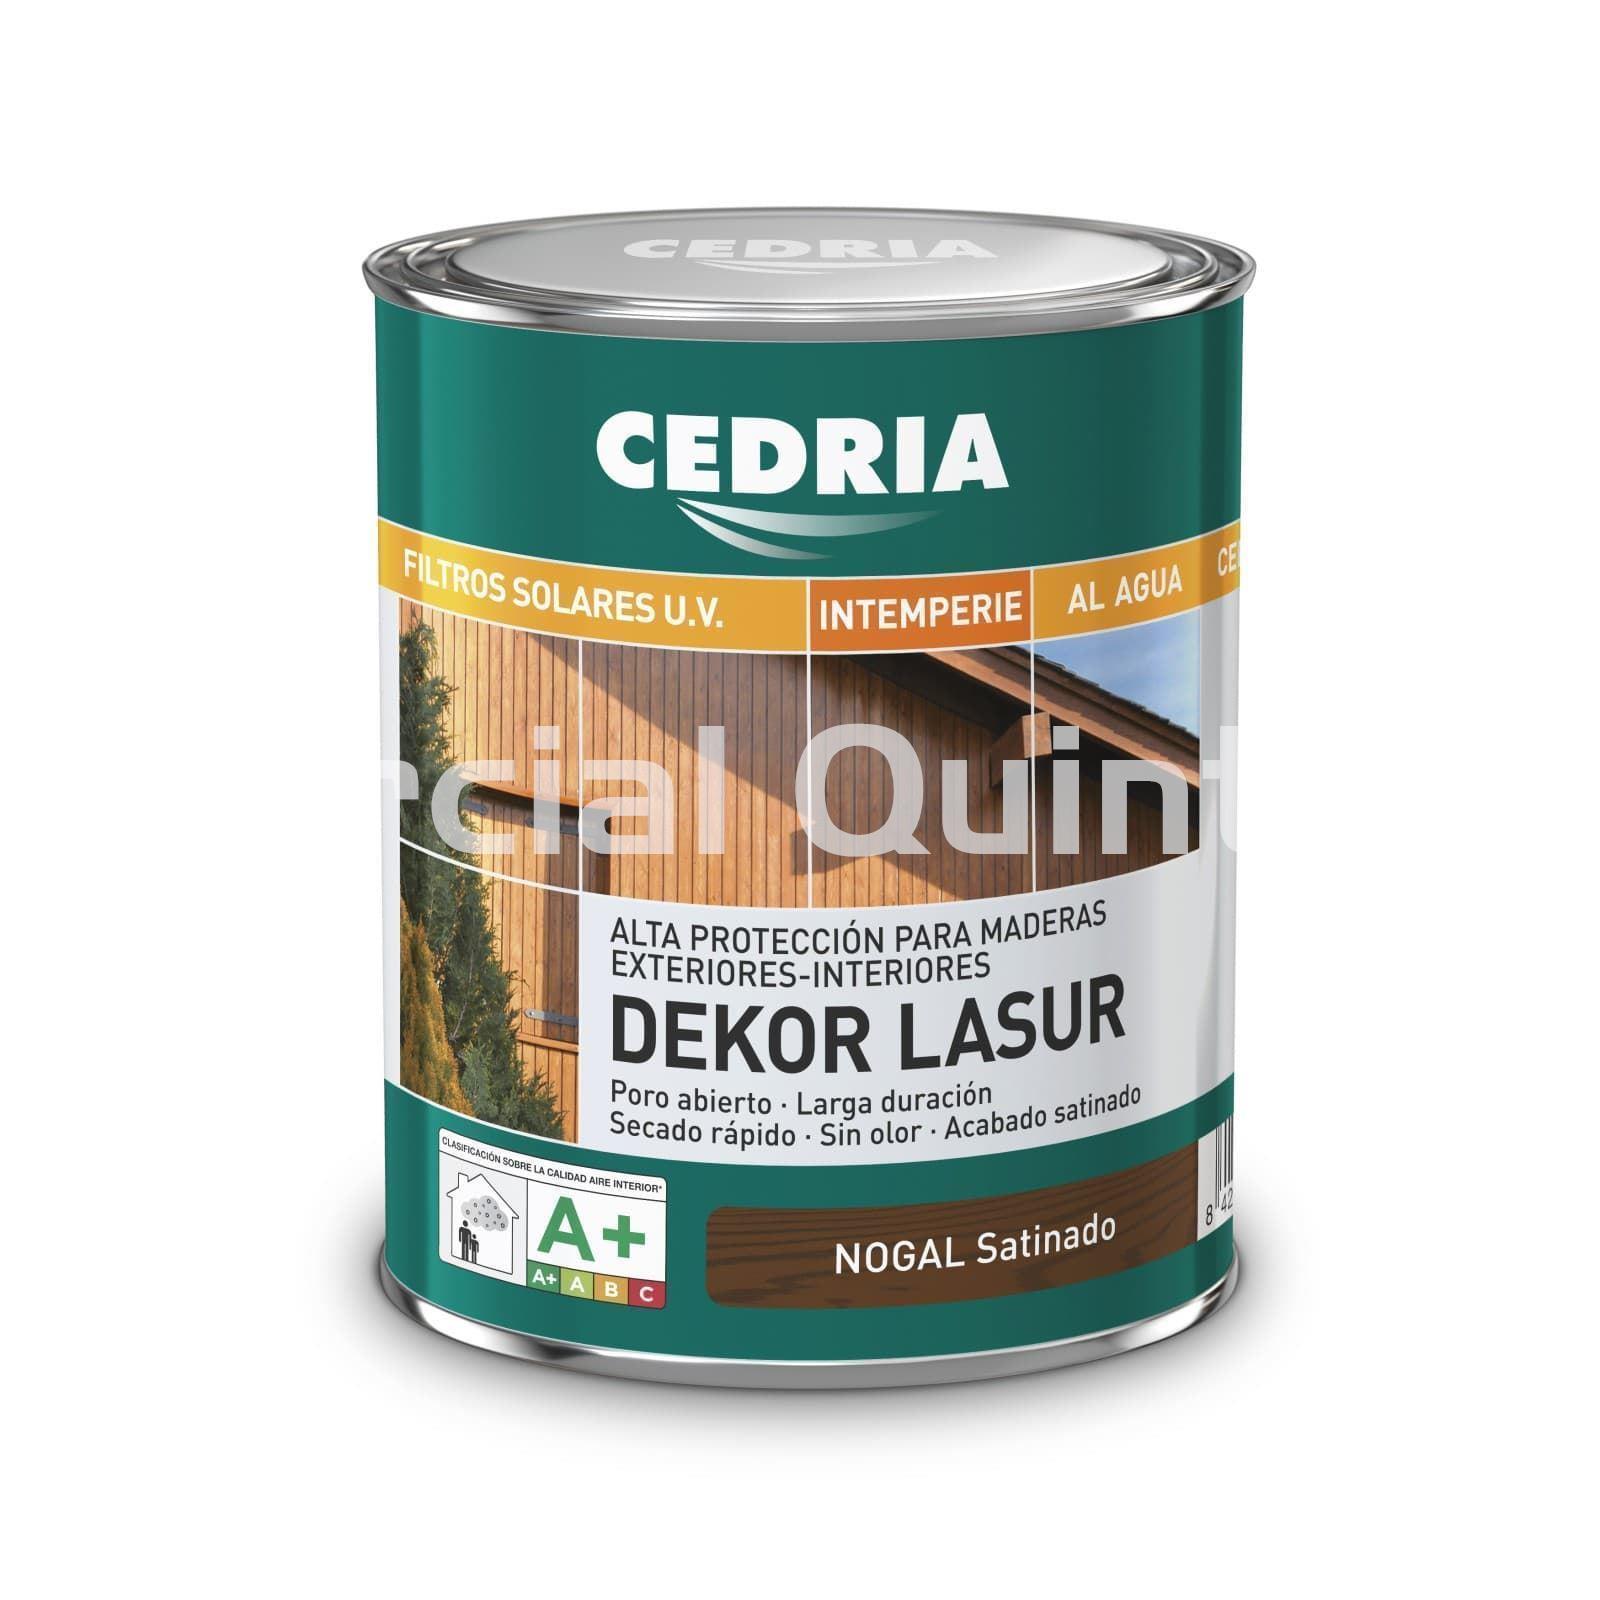 Lasur protector madera exterior al agua Cedria Dekor Lasur 20 litros (Pino)